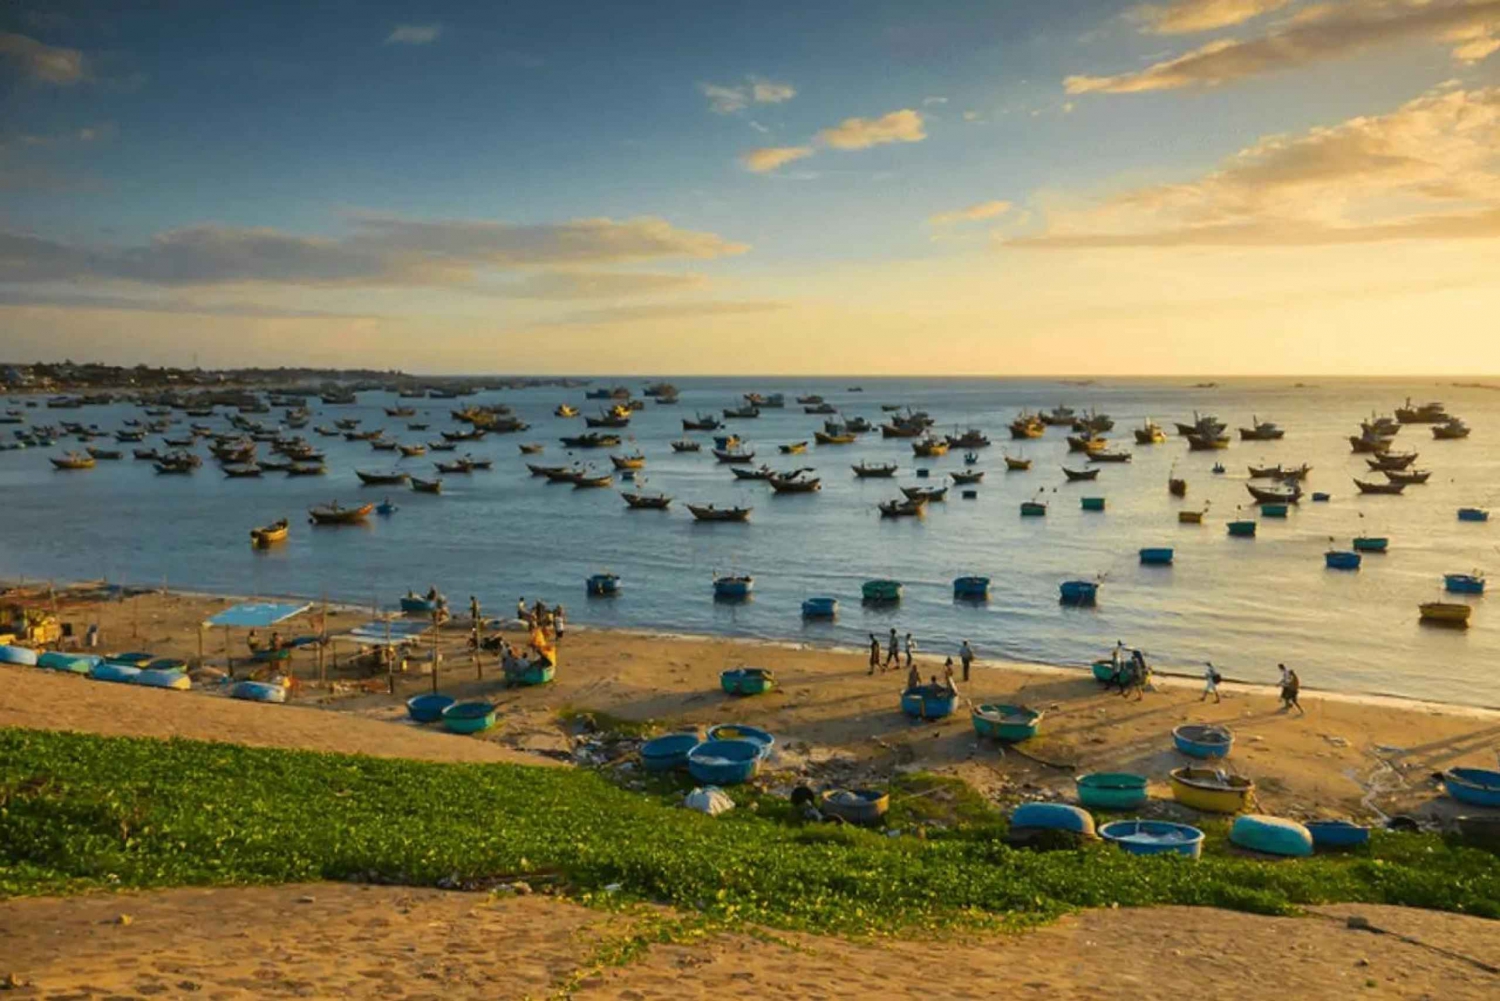 De Ho Chi Minh: A praia de Mui Ne e a vila de pescadores local